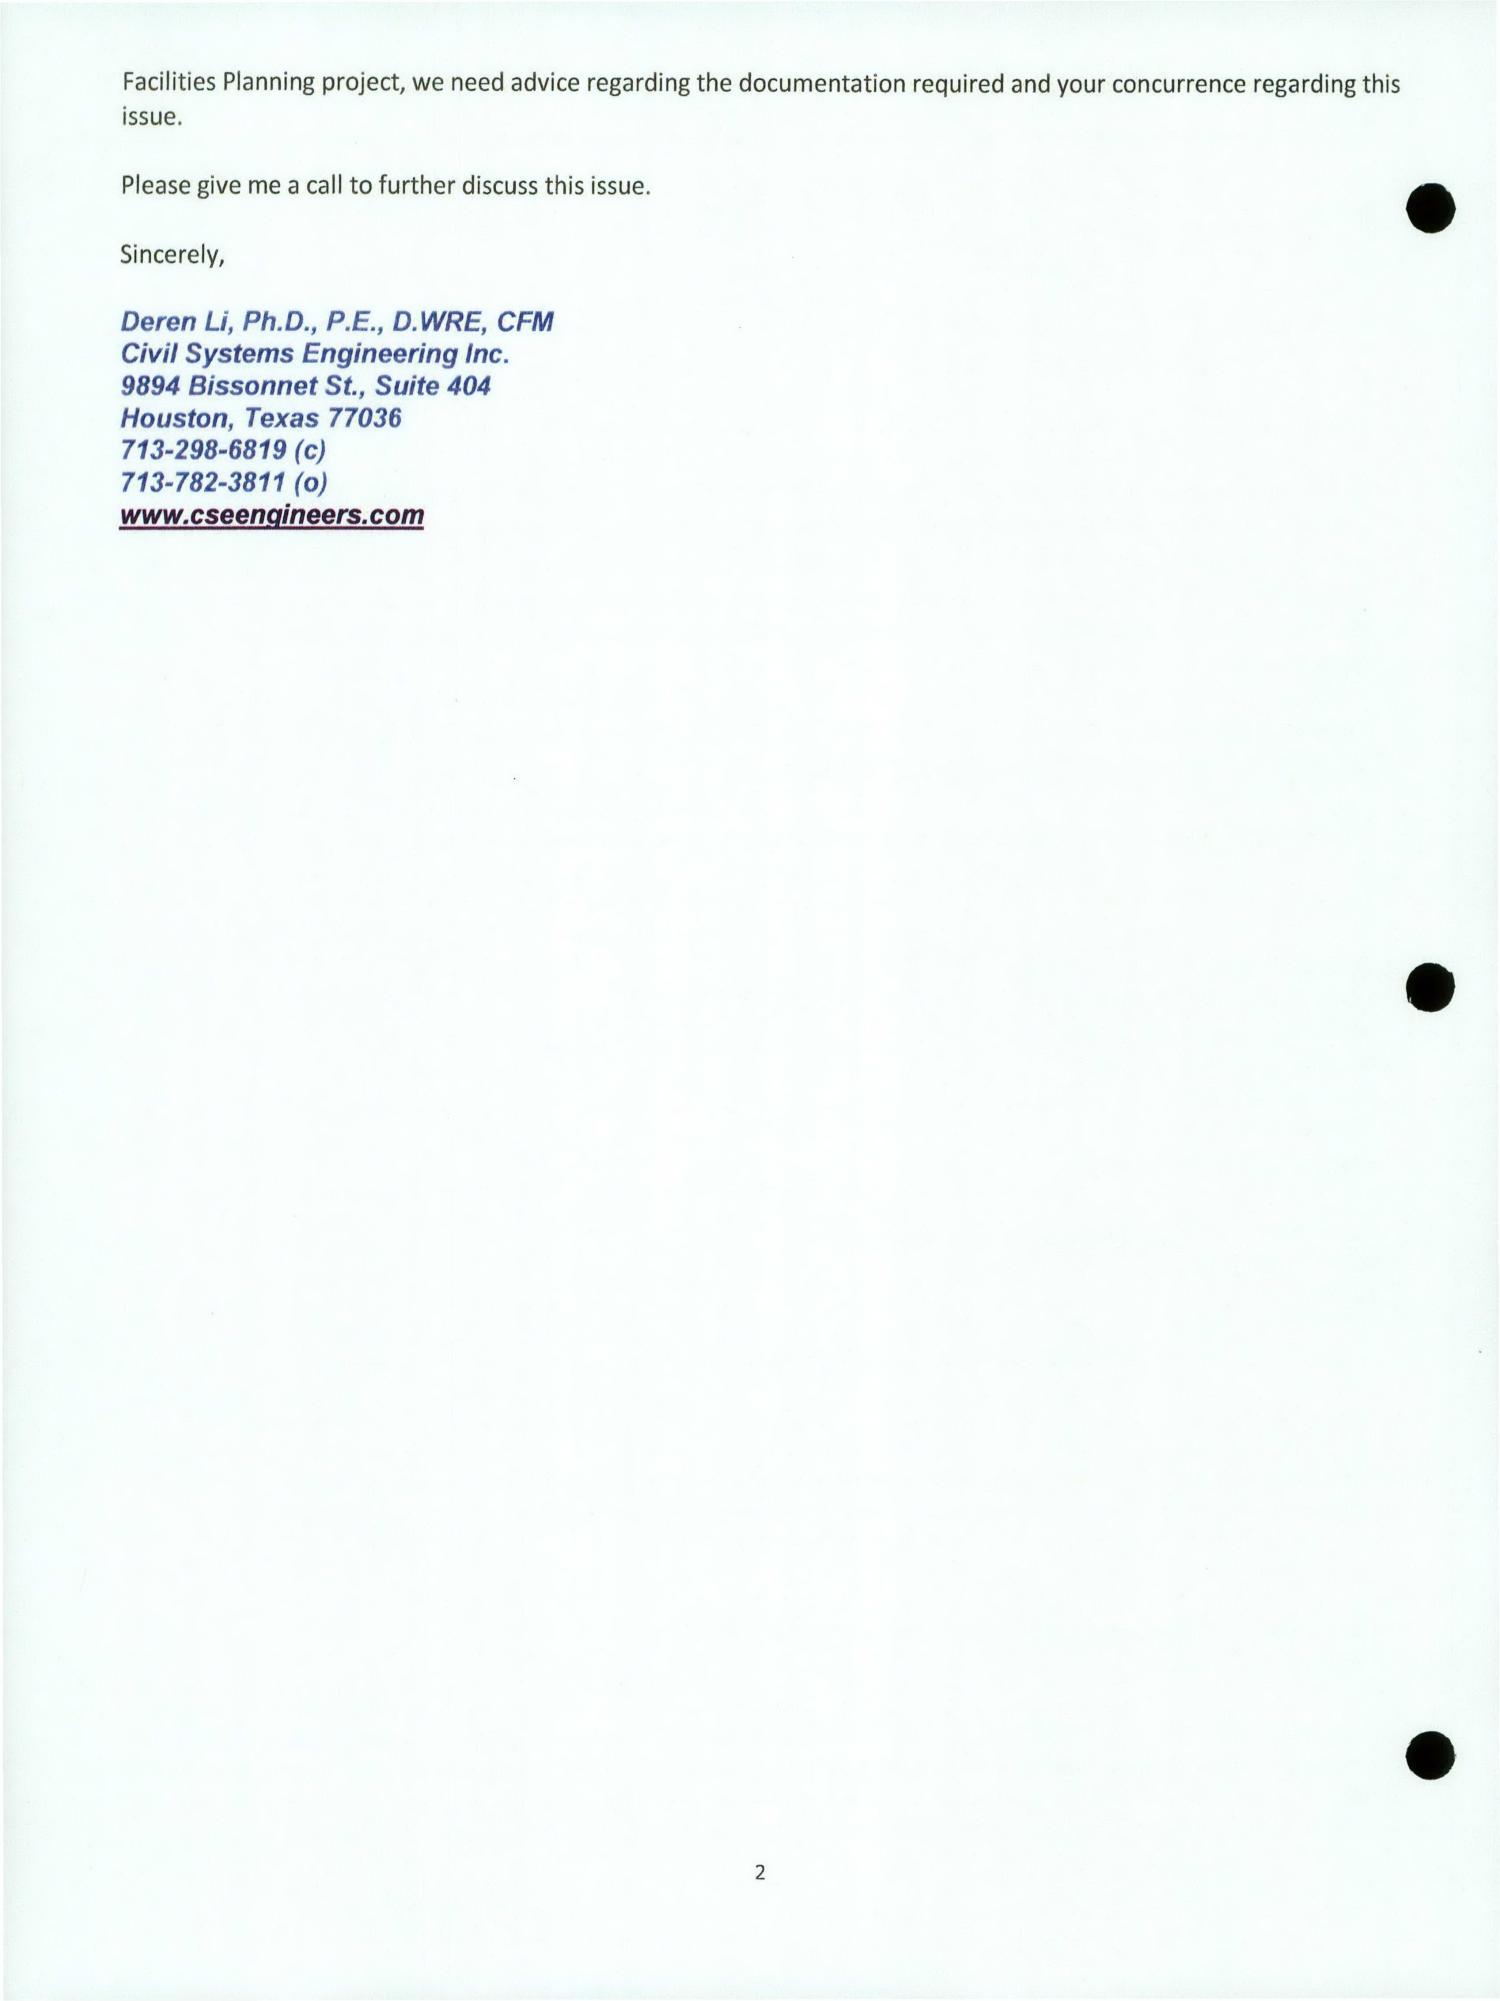 Addendum to Regional Water Supply Facilities Plan Final Report (April 2011)
                                                
                                                    2
                                                